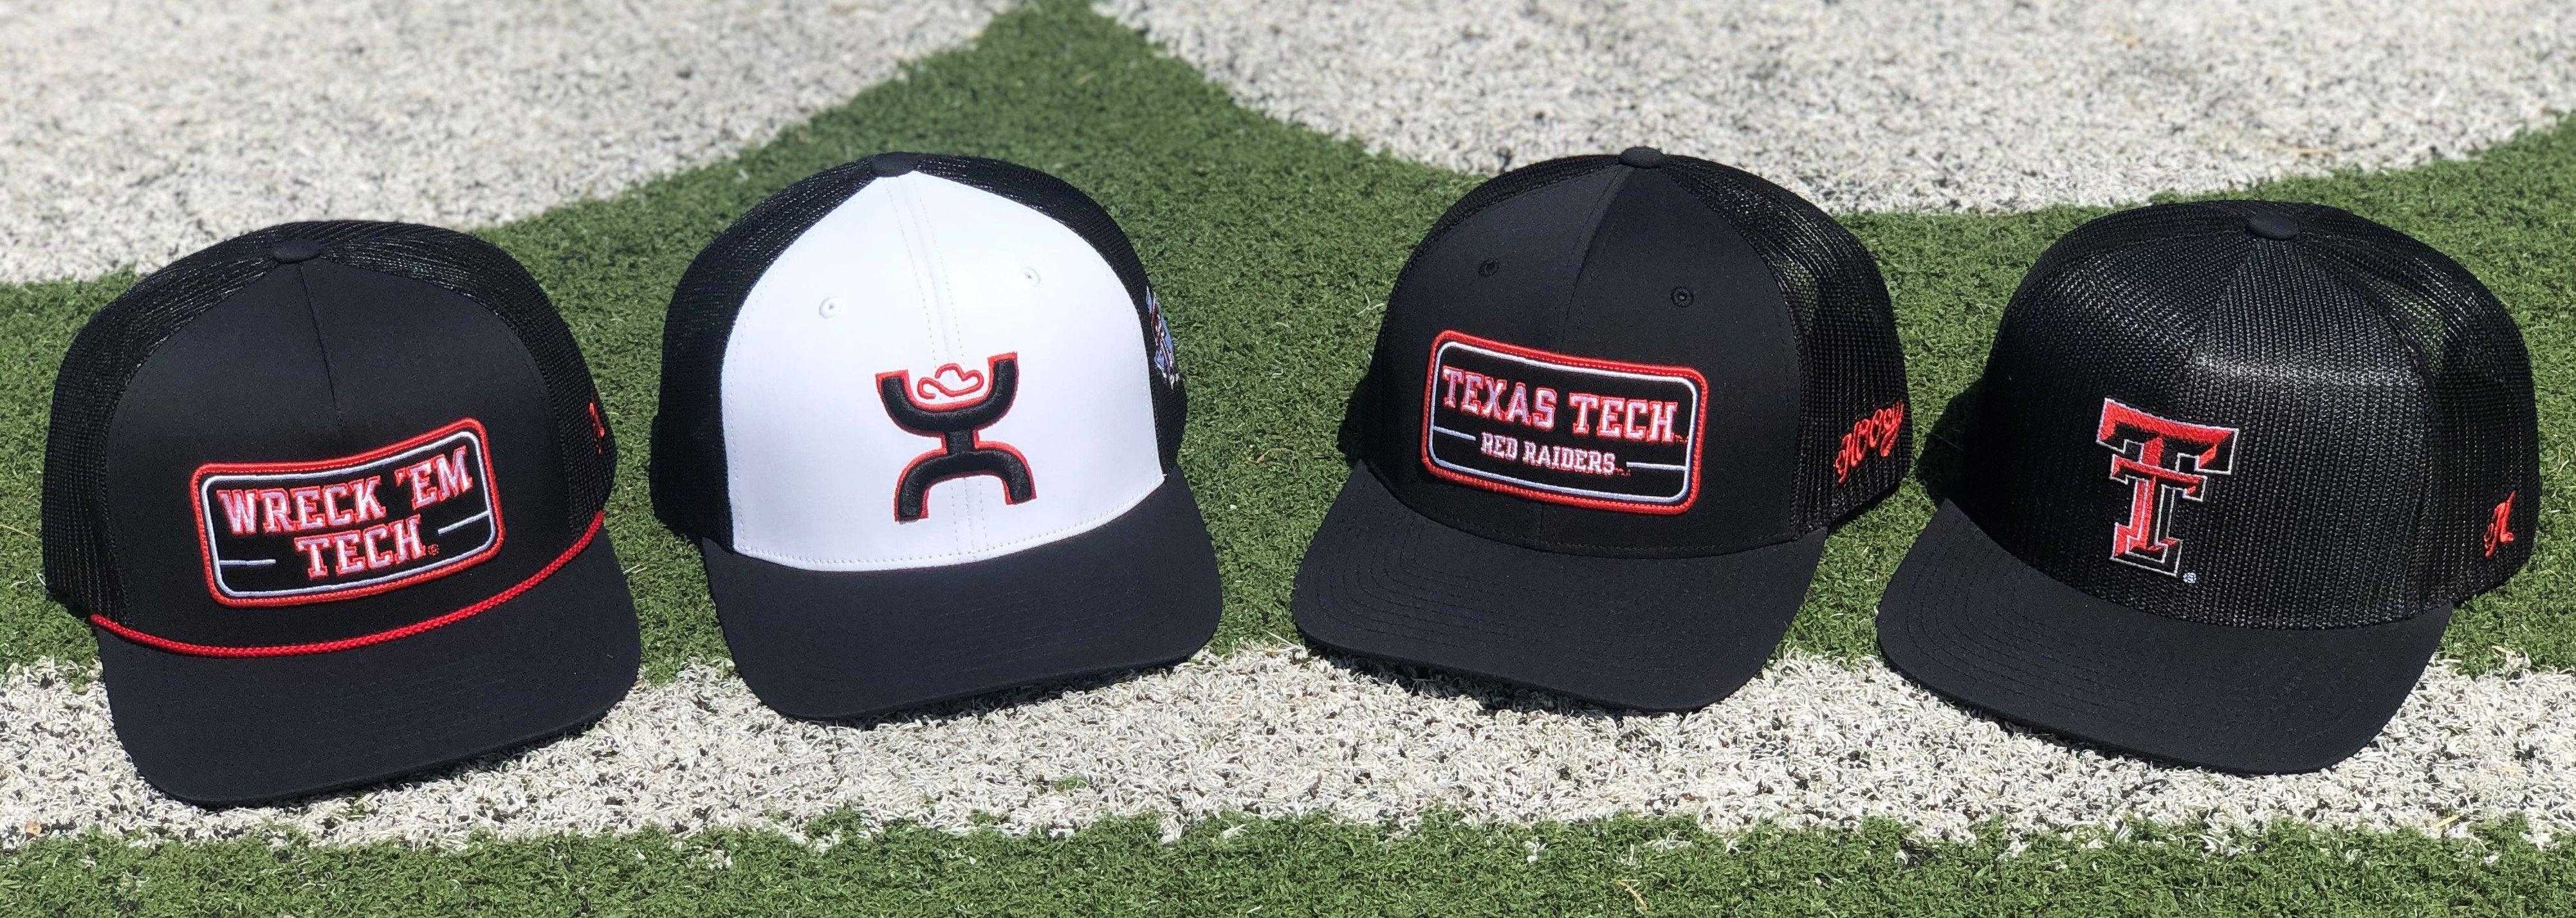 Texas Tech Hover Helmet – Texas Tech Alumni Association Shop